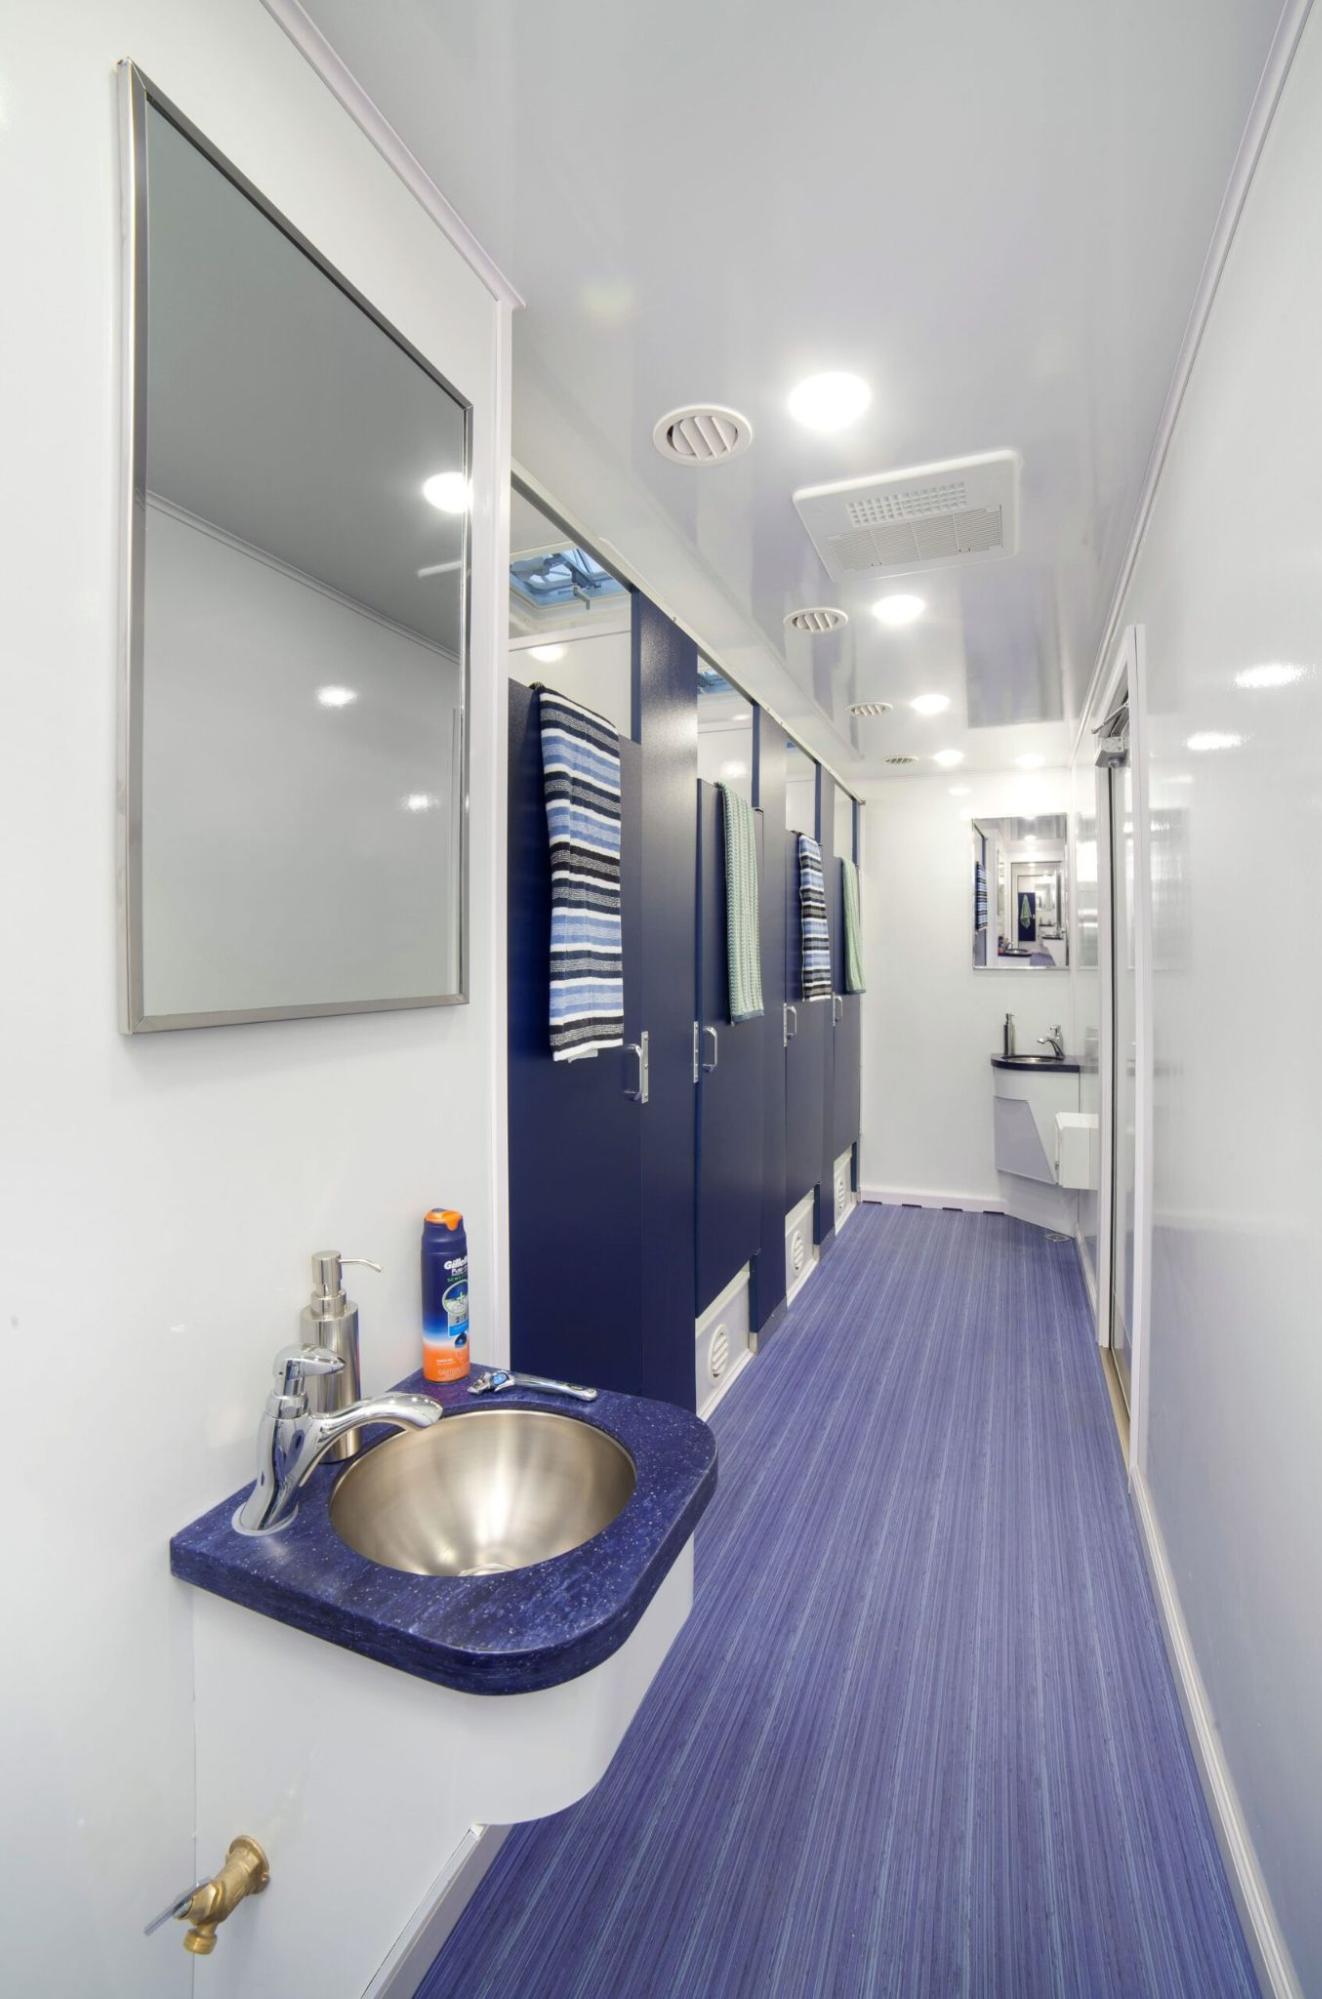 interior of restroom shower trailer combo unit